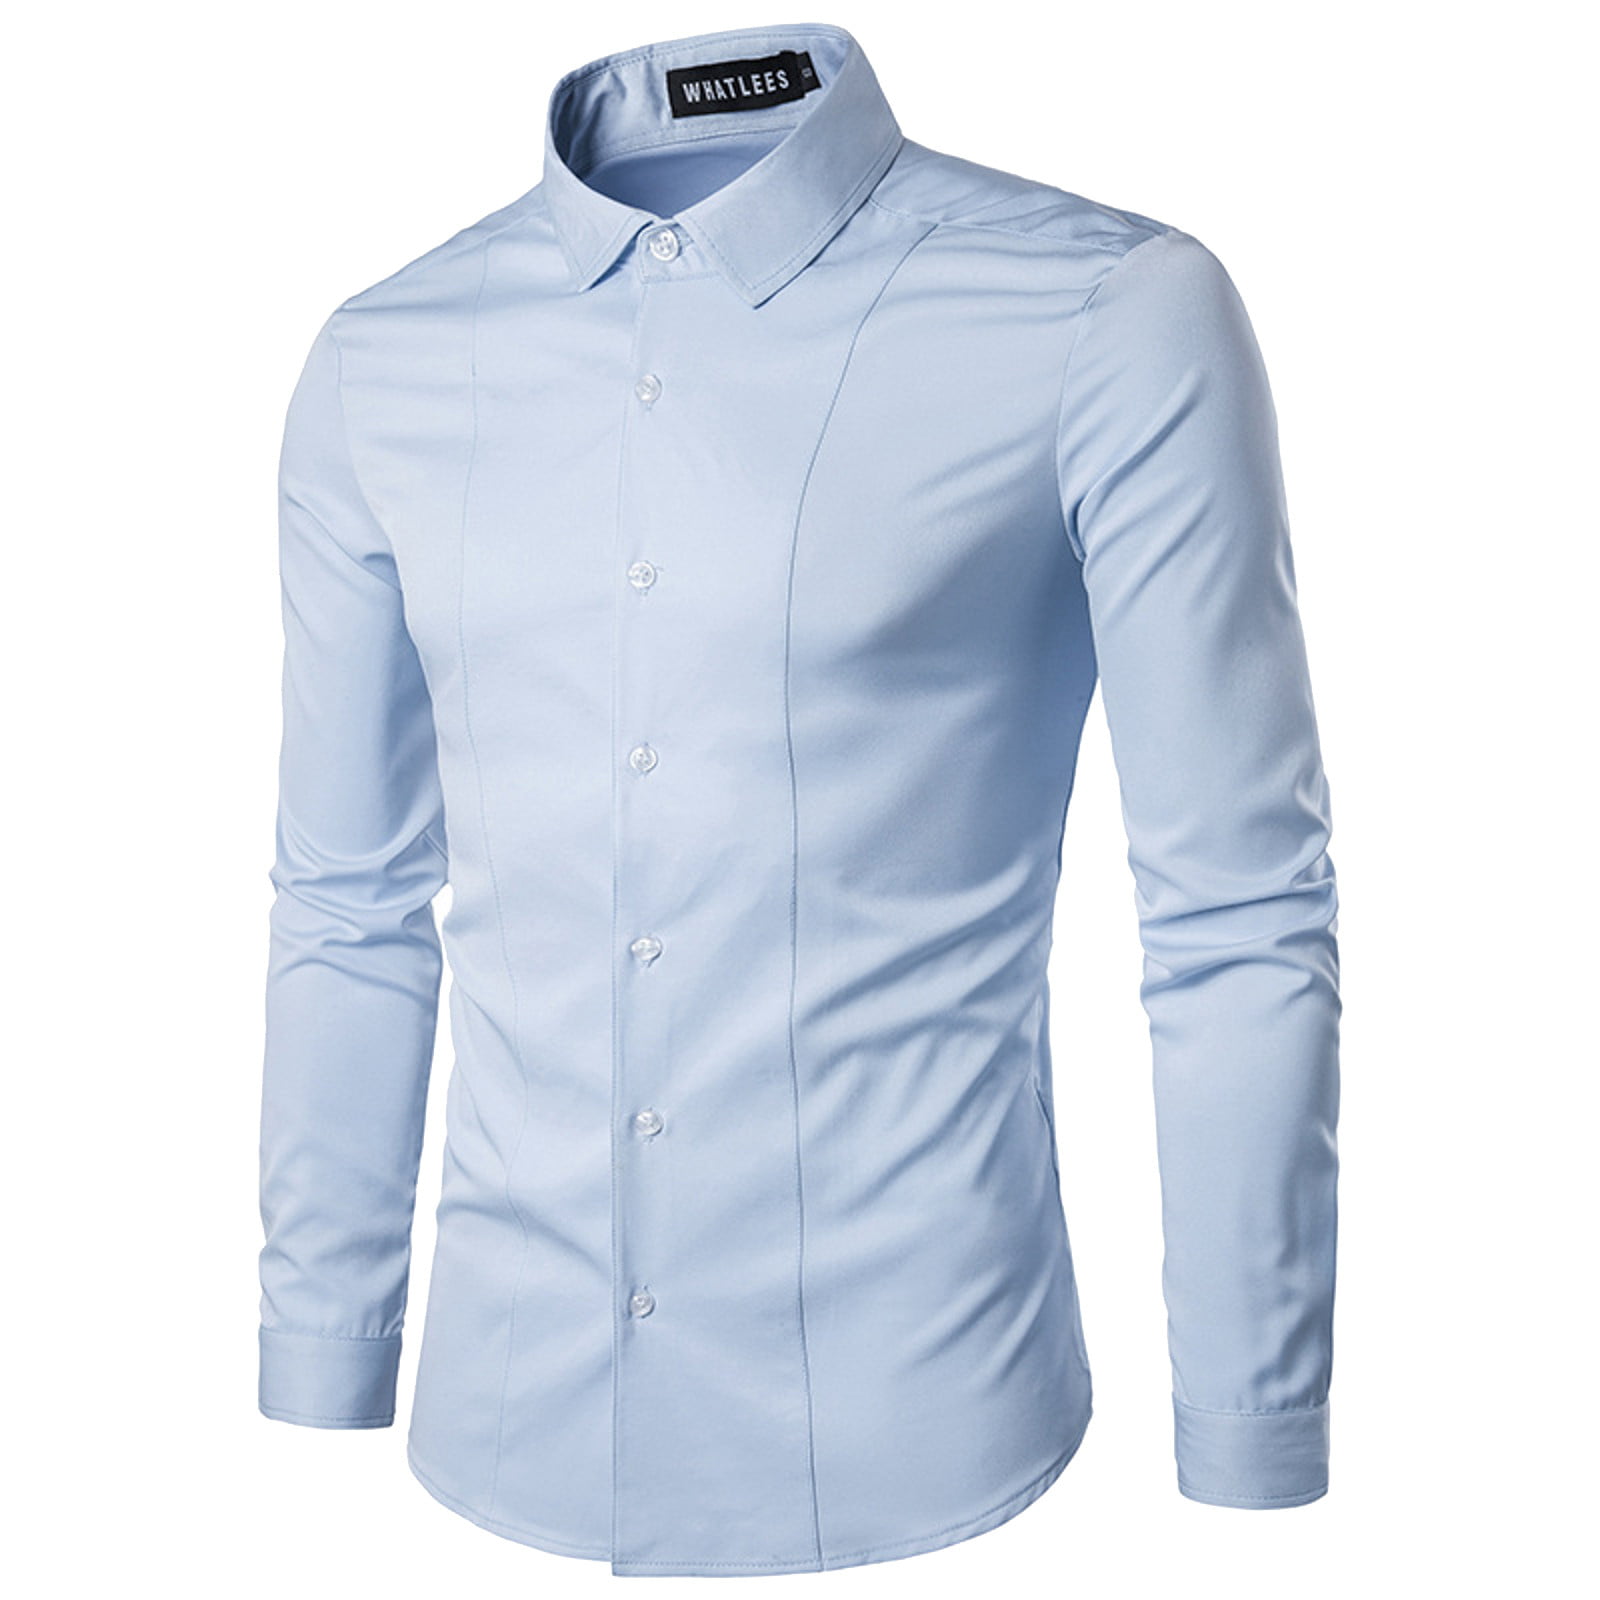 WEAIXIMIUNG Long Sleeve Shirts for Men White Mens Fashion Casual Solid ...